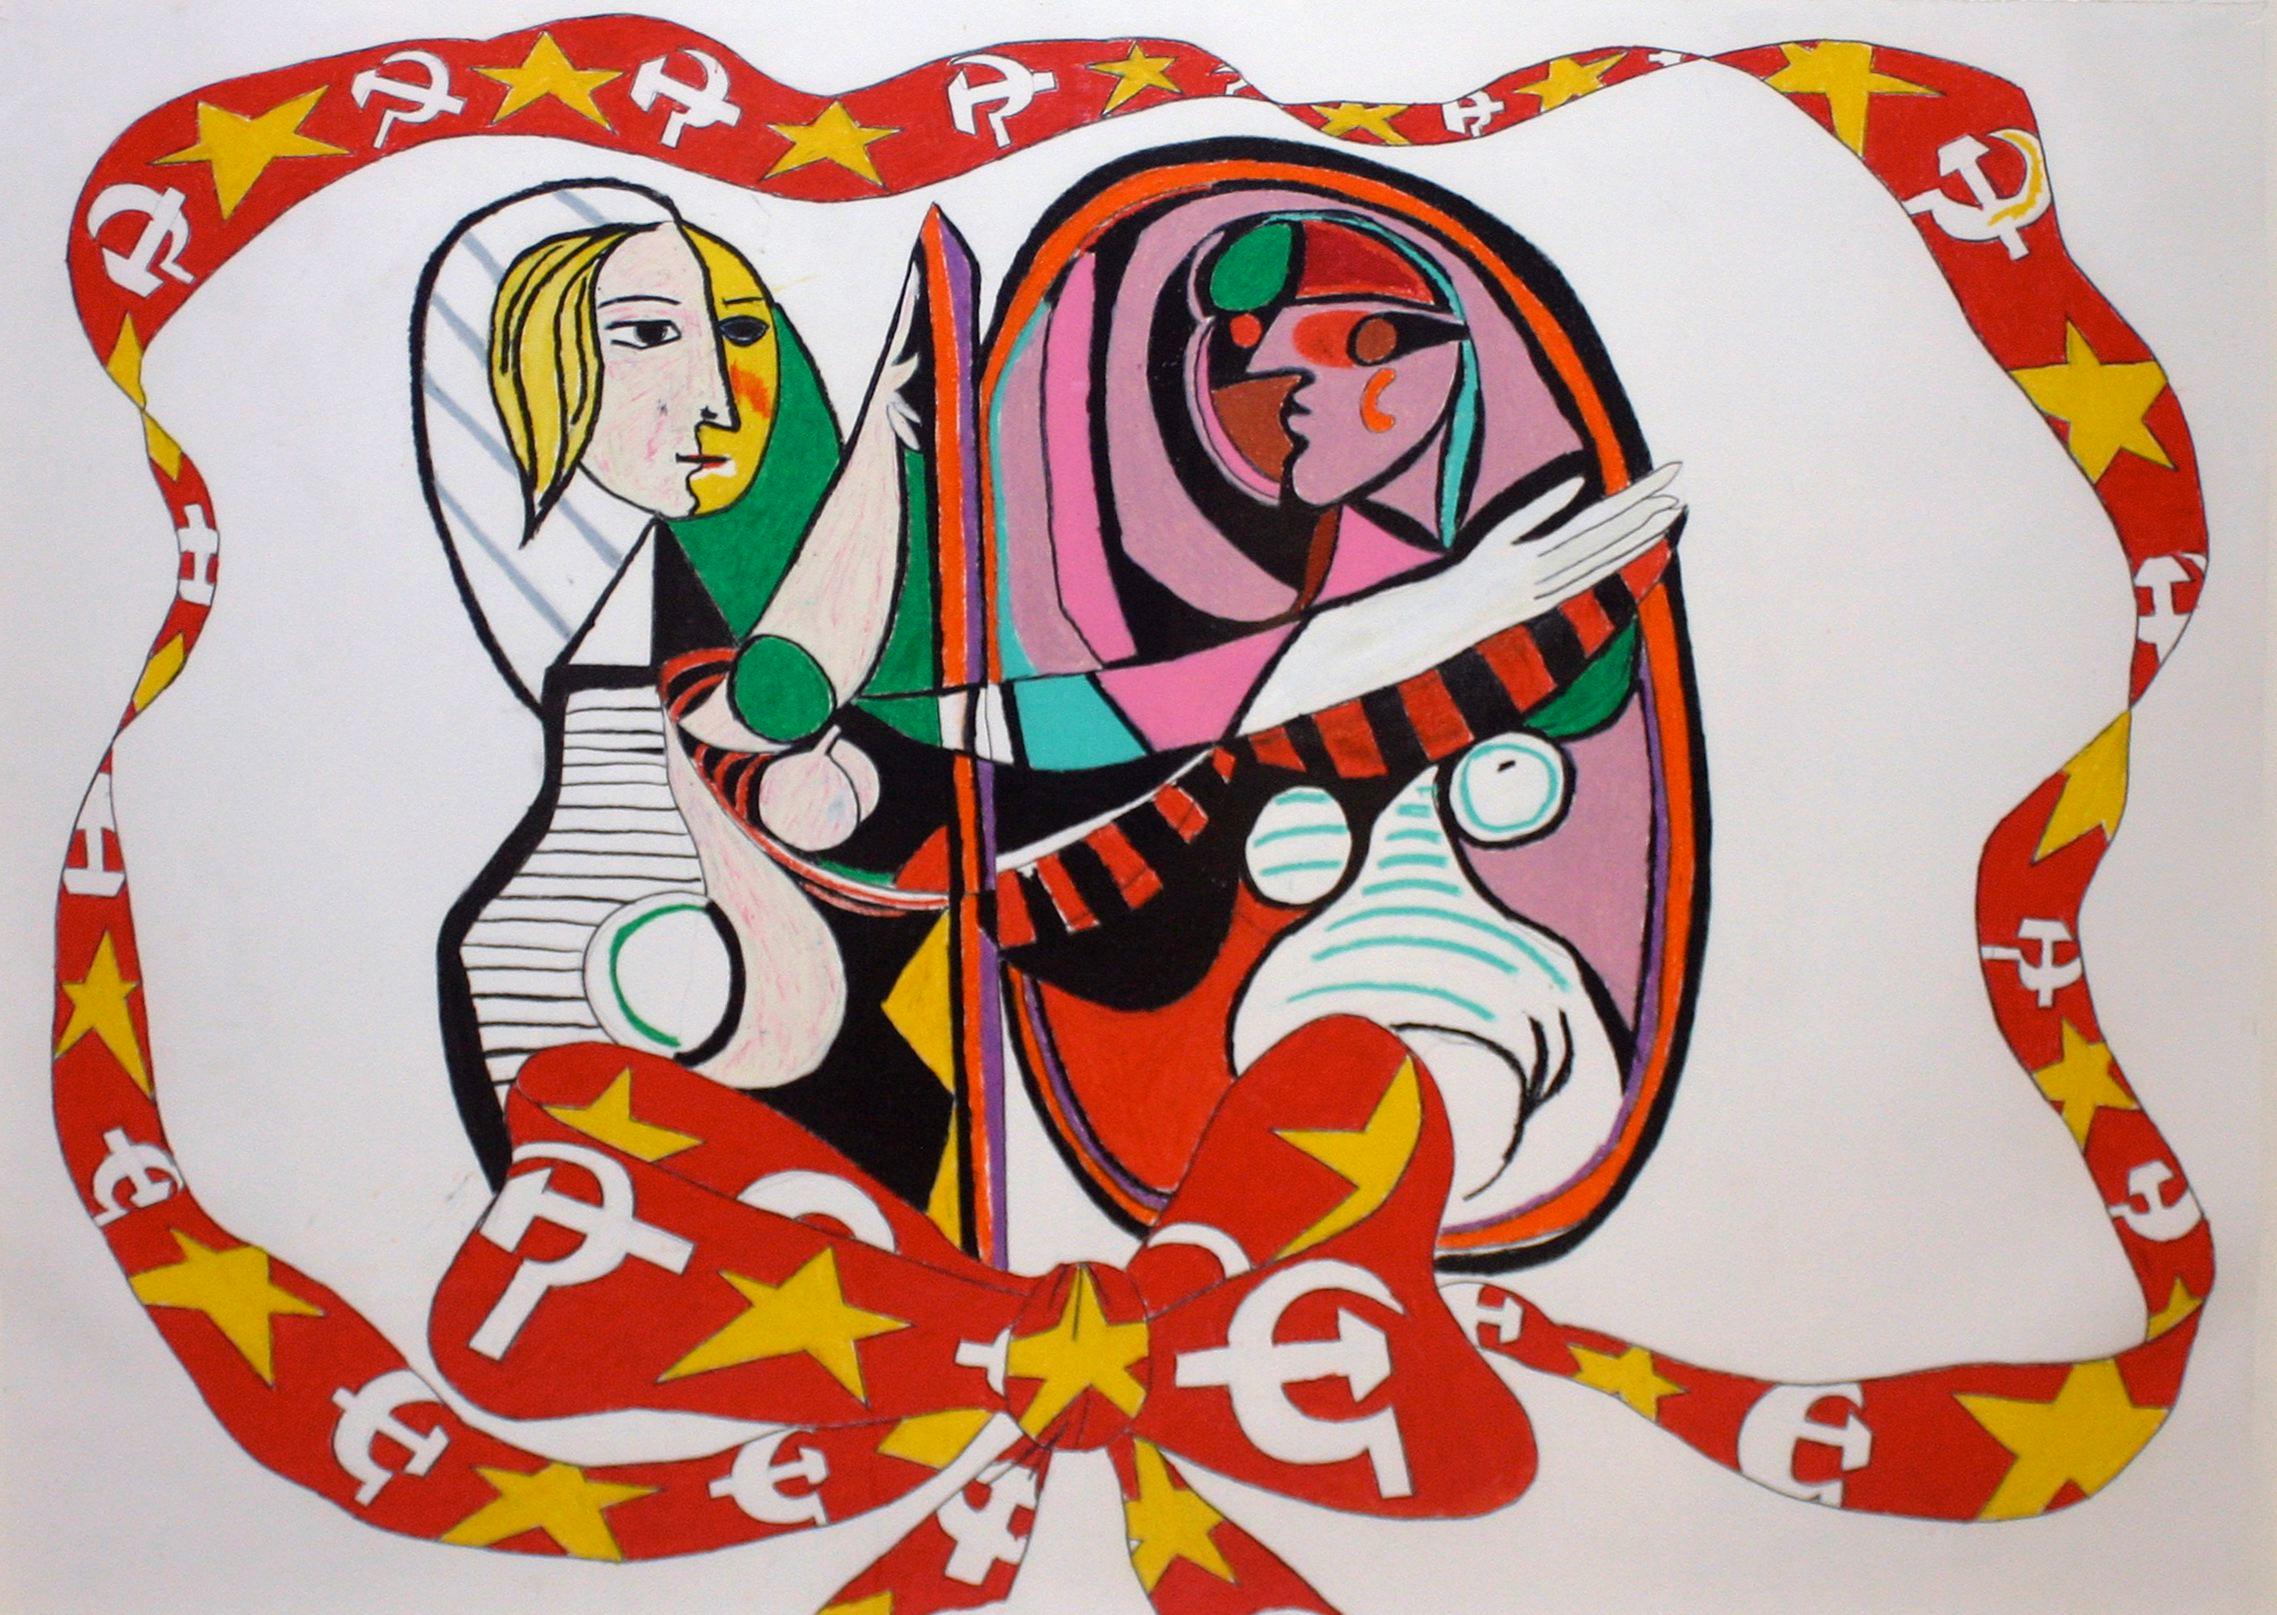 Jane Kaplowitz Figurative Art - Picasso and Politics